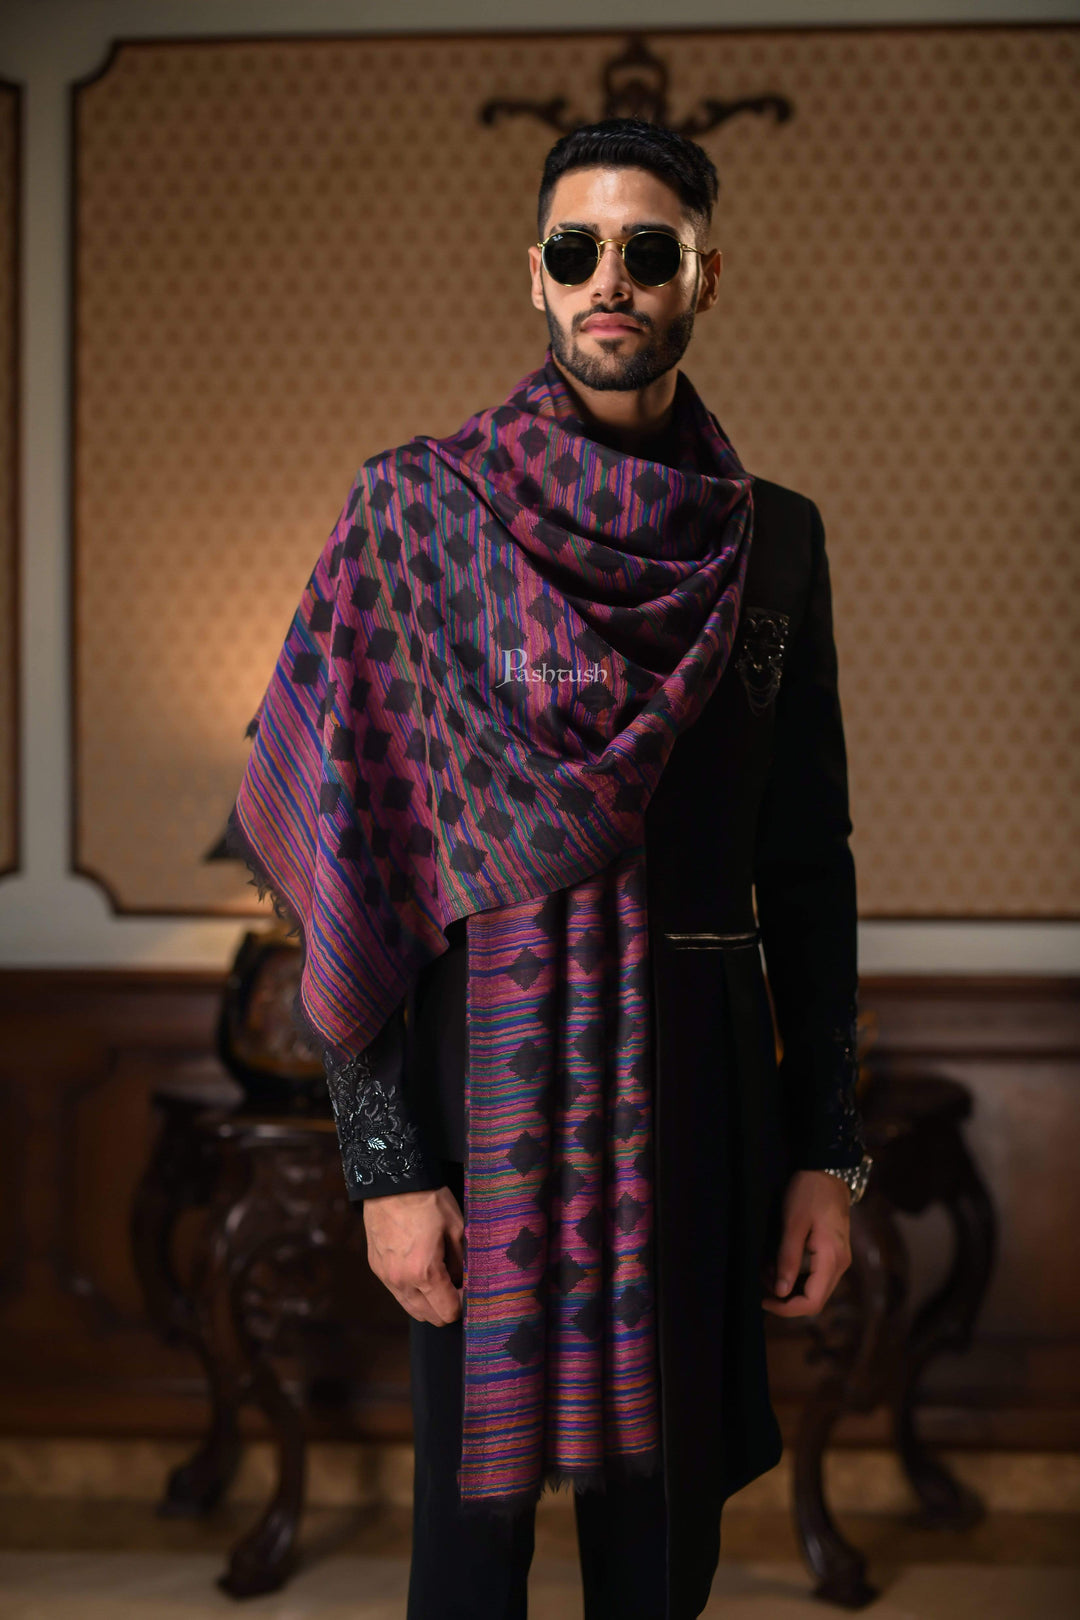 Pashtush India 70x200 Pashtush Mens Reversible Stole, 100% Pure Wool With Woolmark Certification, Multi coloured